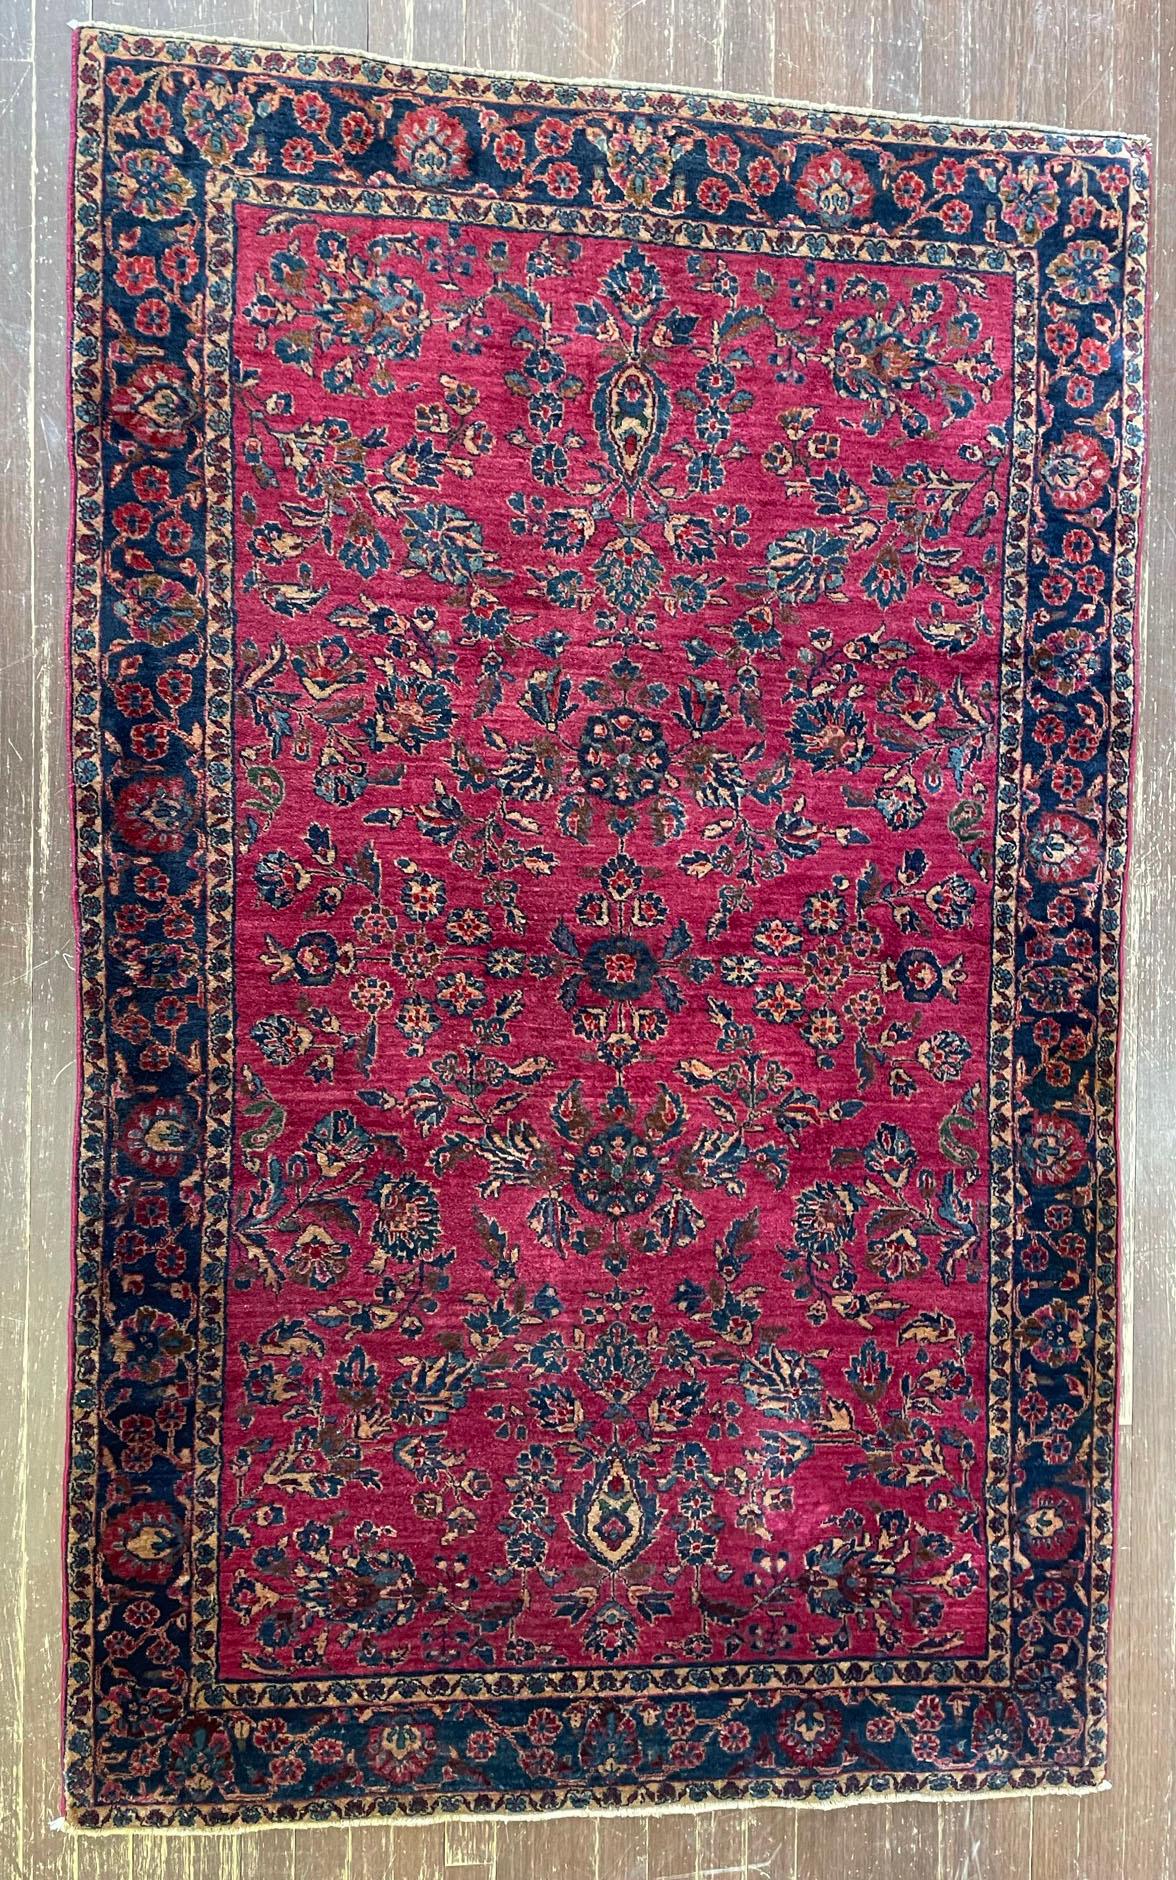 Antique handmade Persian Mohajeran Sarouk rug, 4' x 6'6